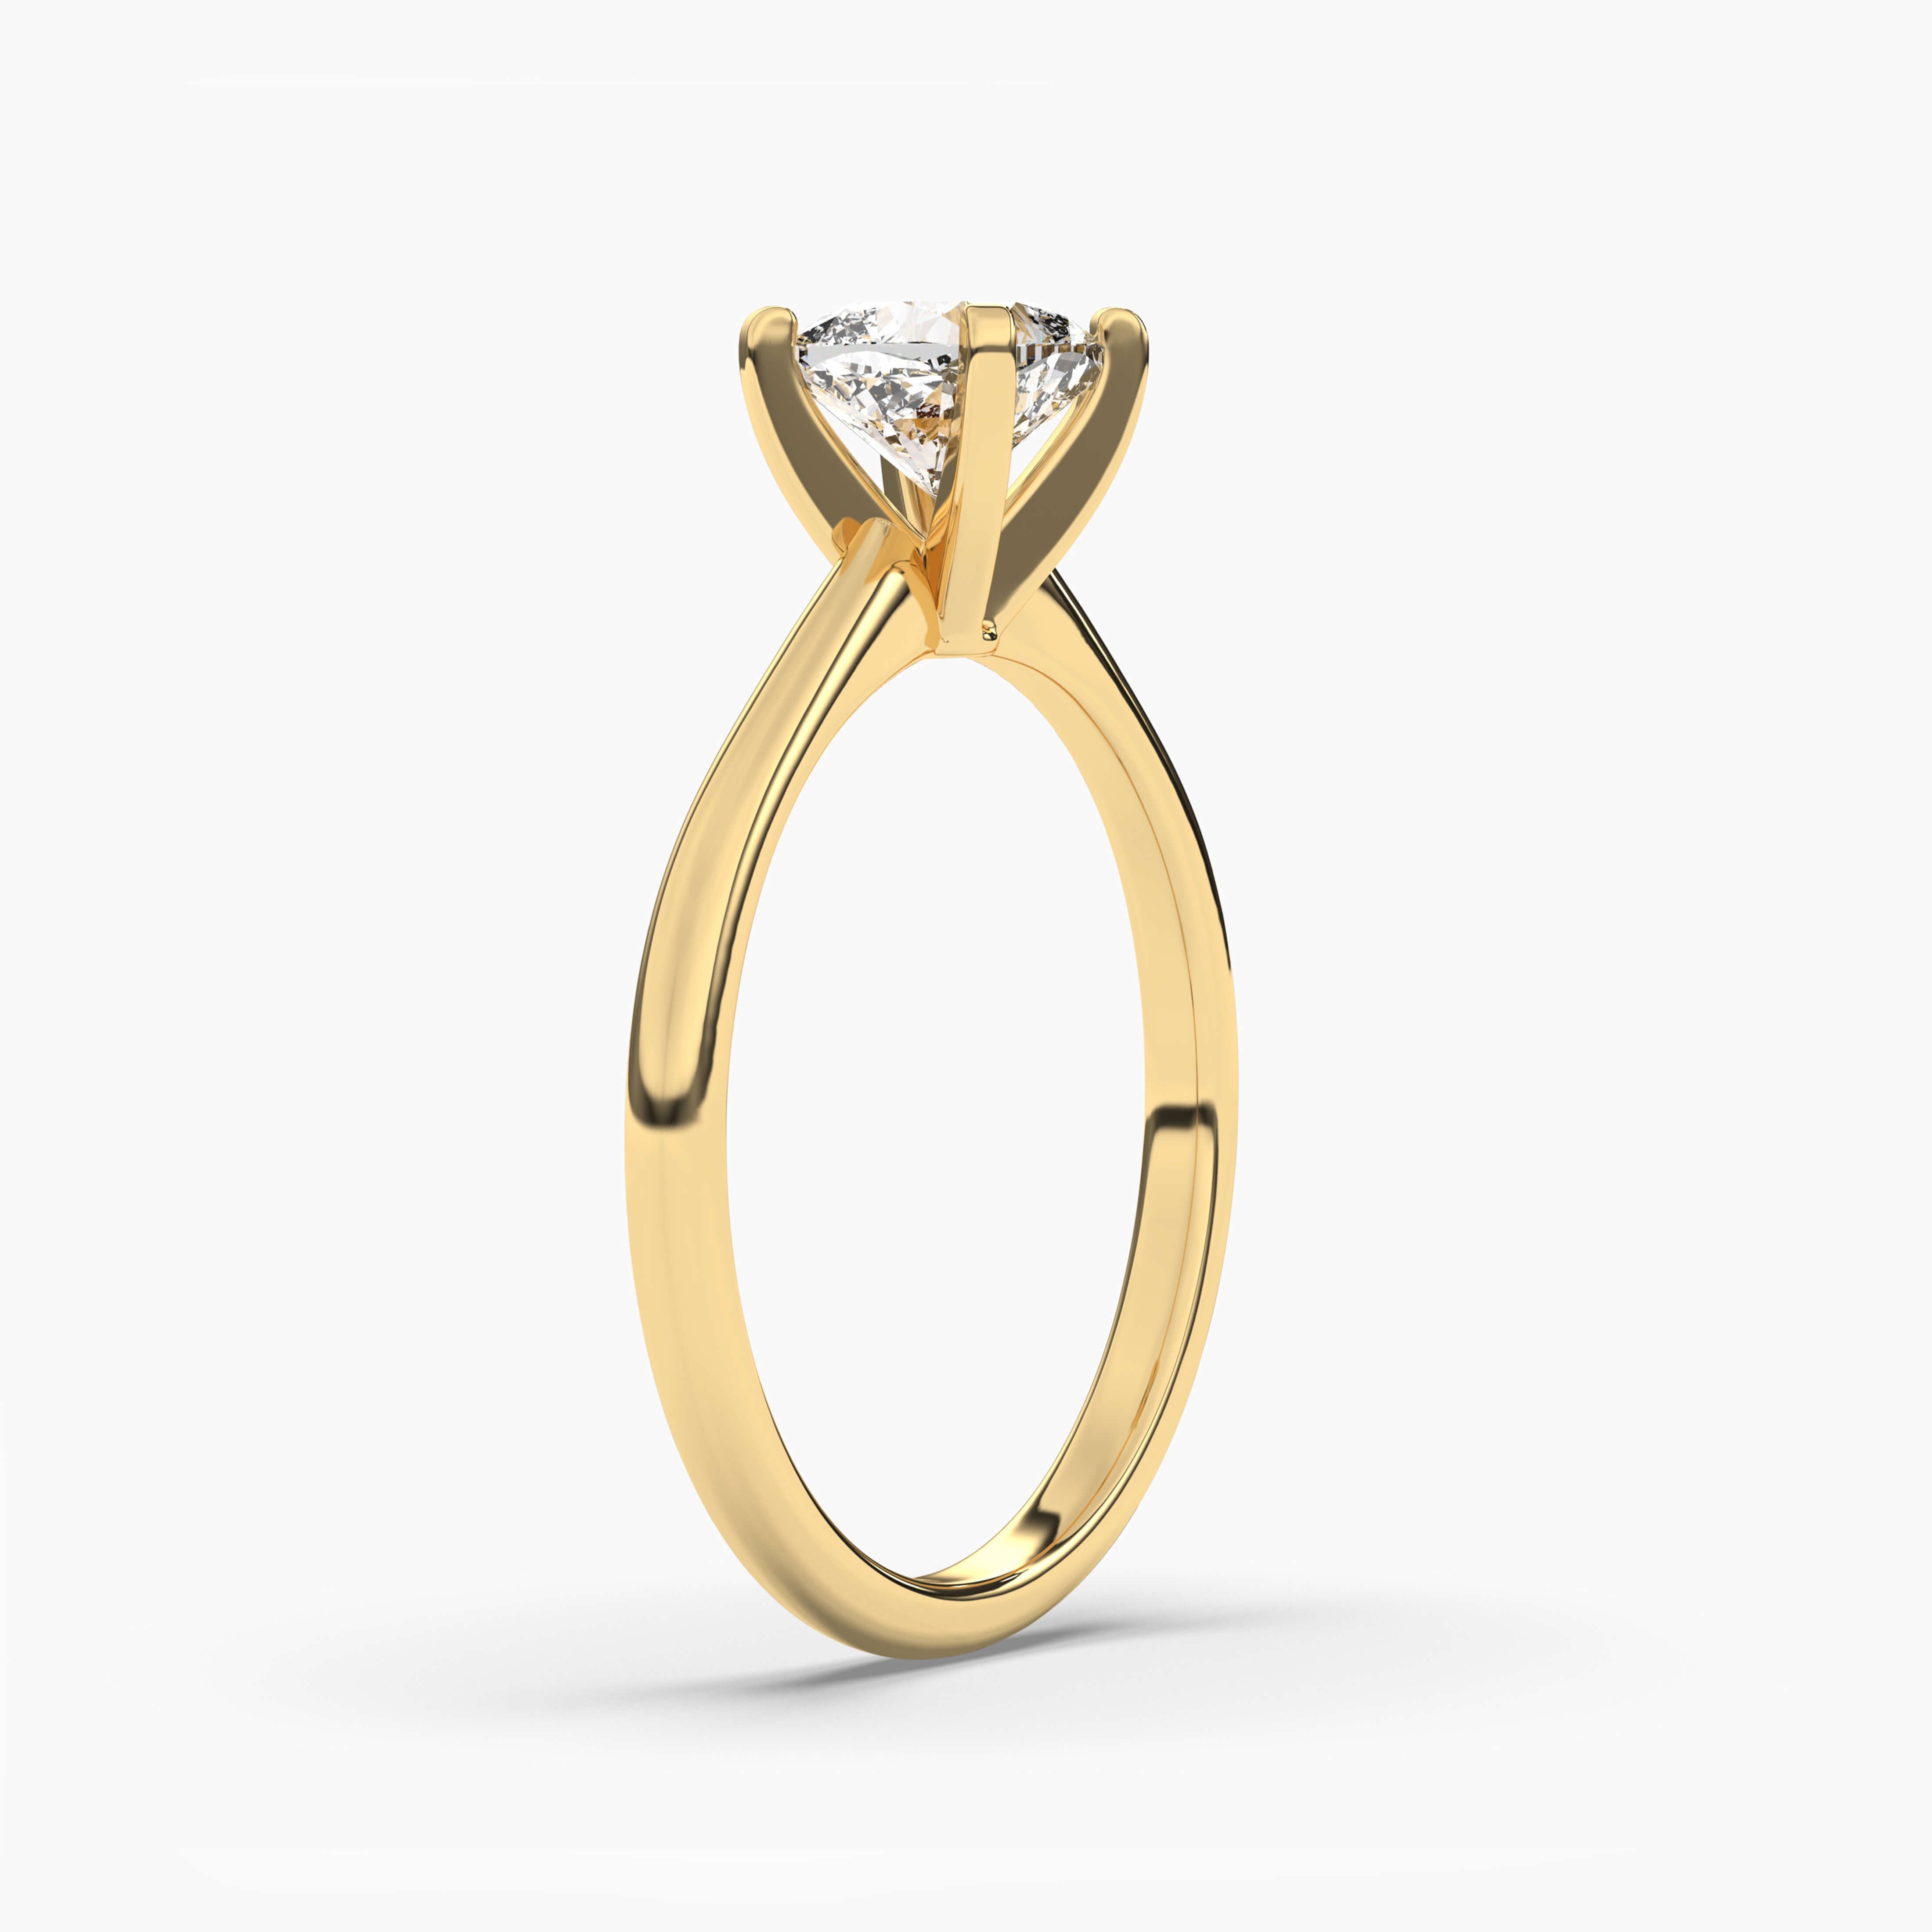 Cushion Cut Yellow Diamond Engagement Ring 